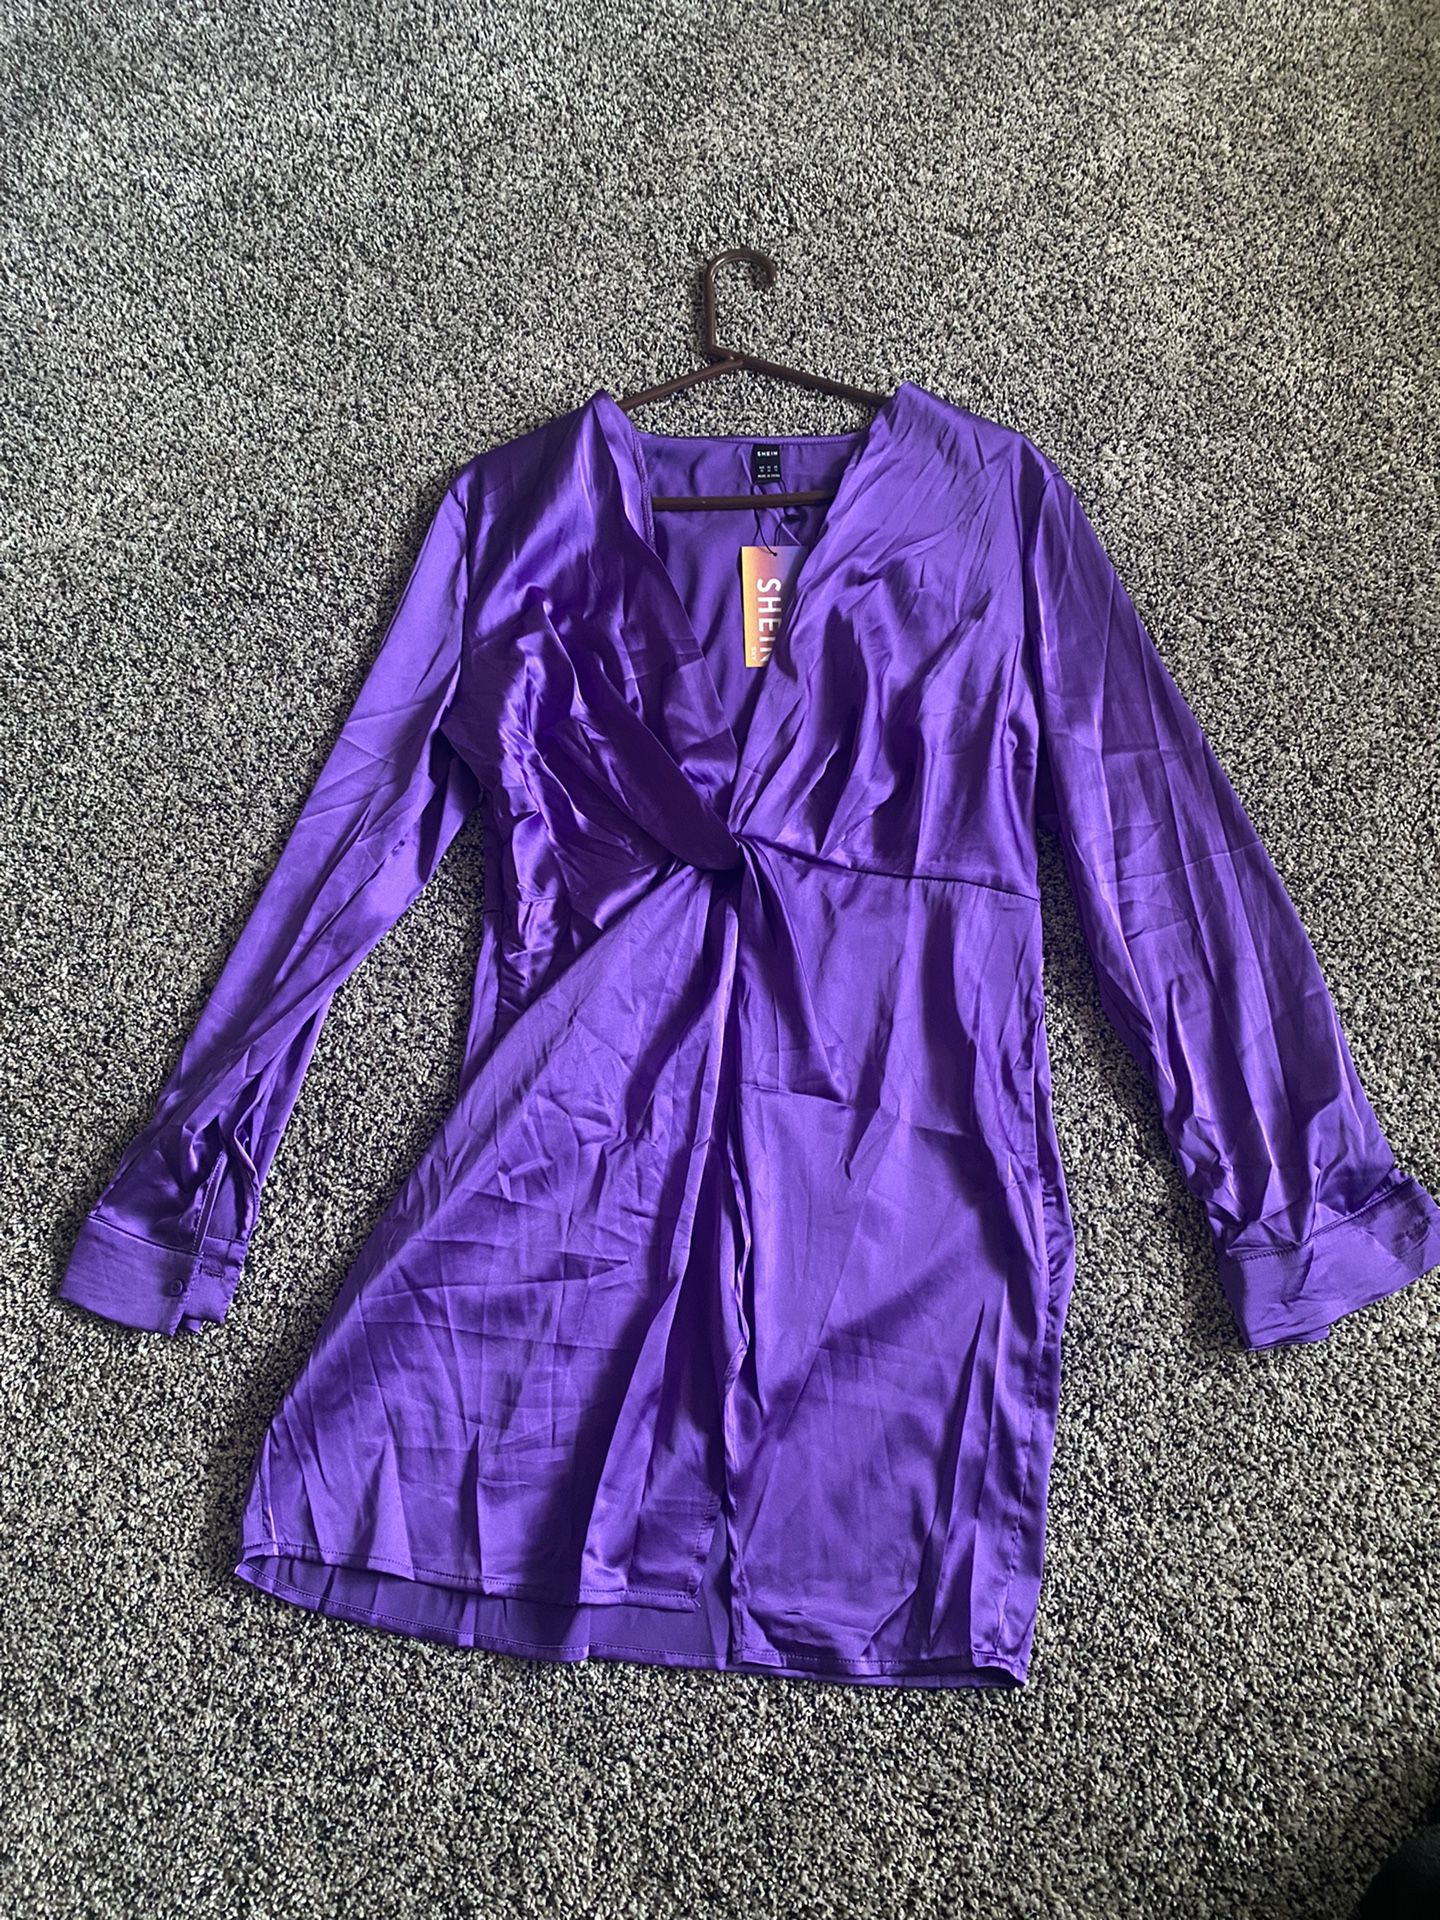 Satin Purple Dress Brand New 